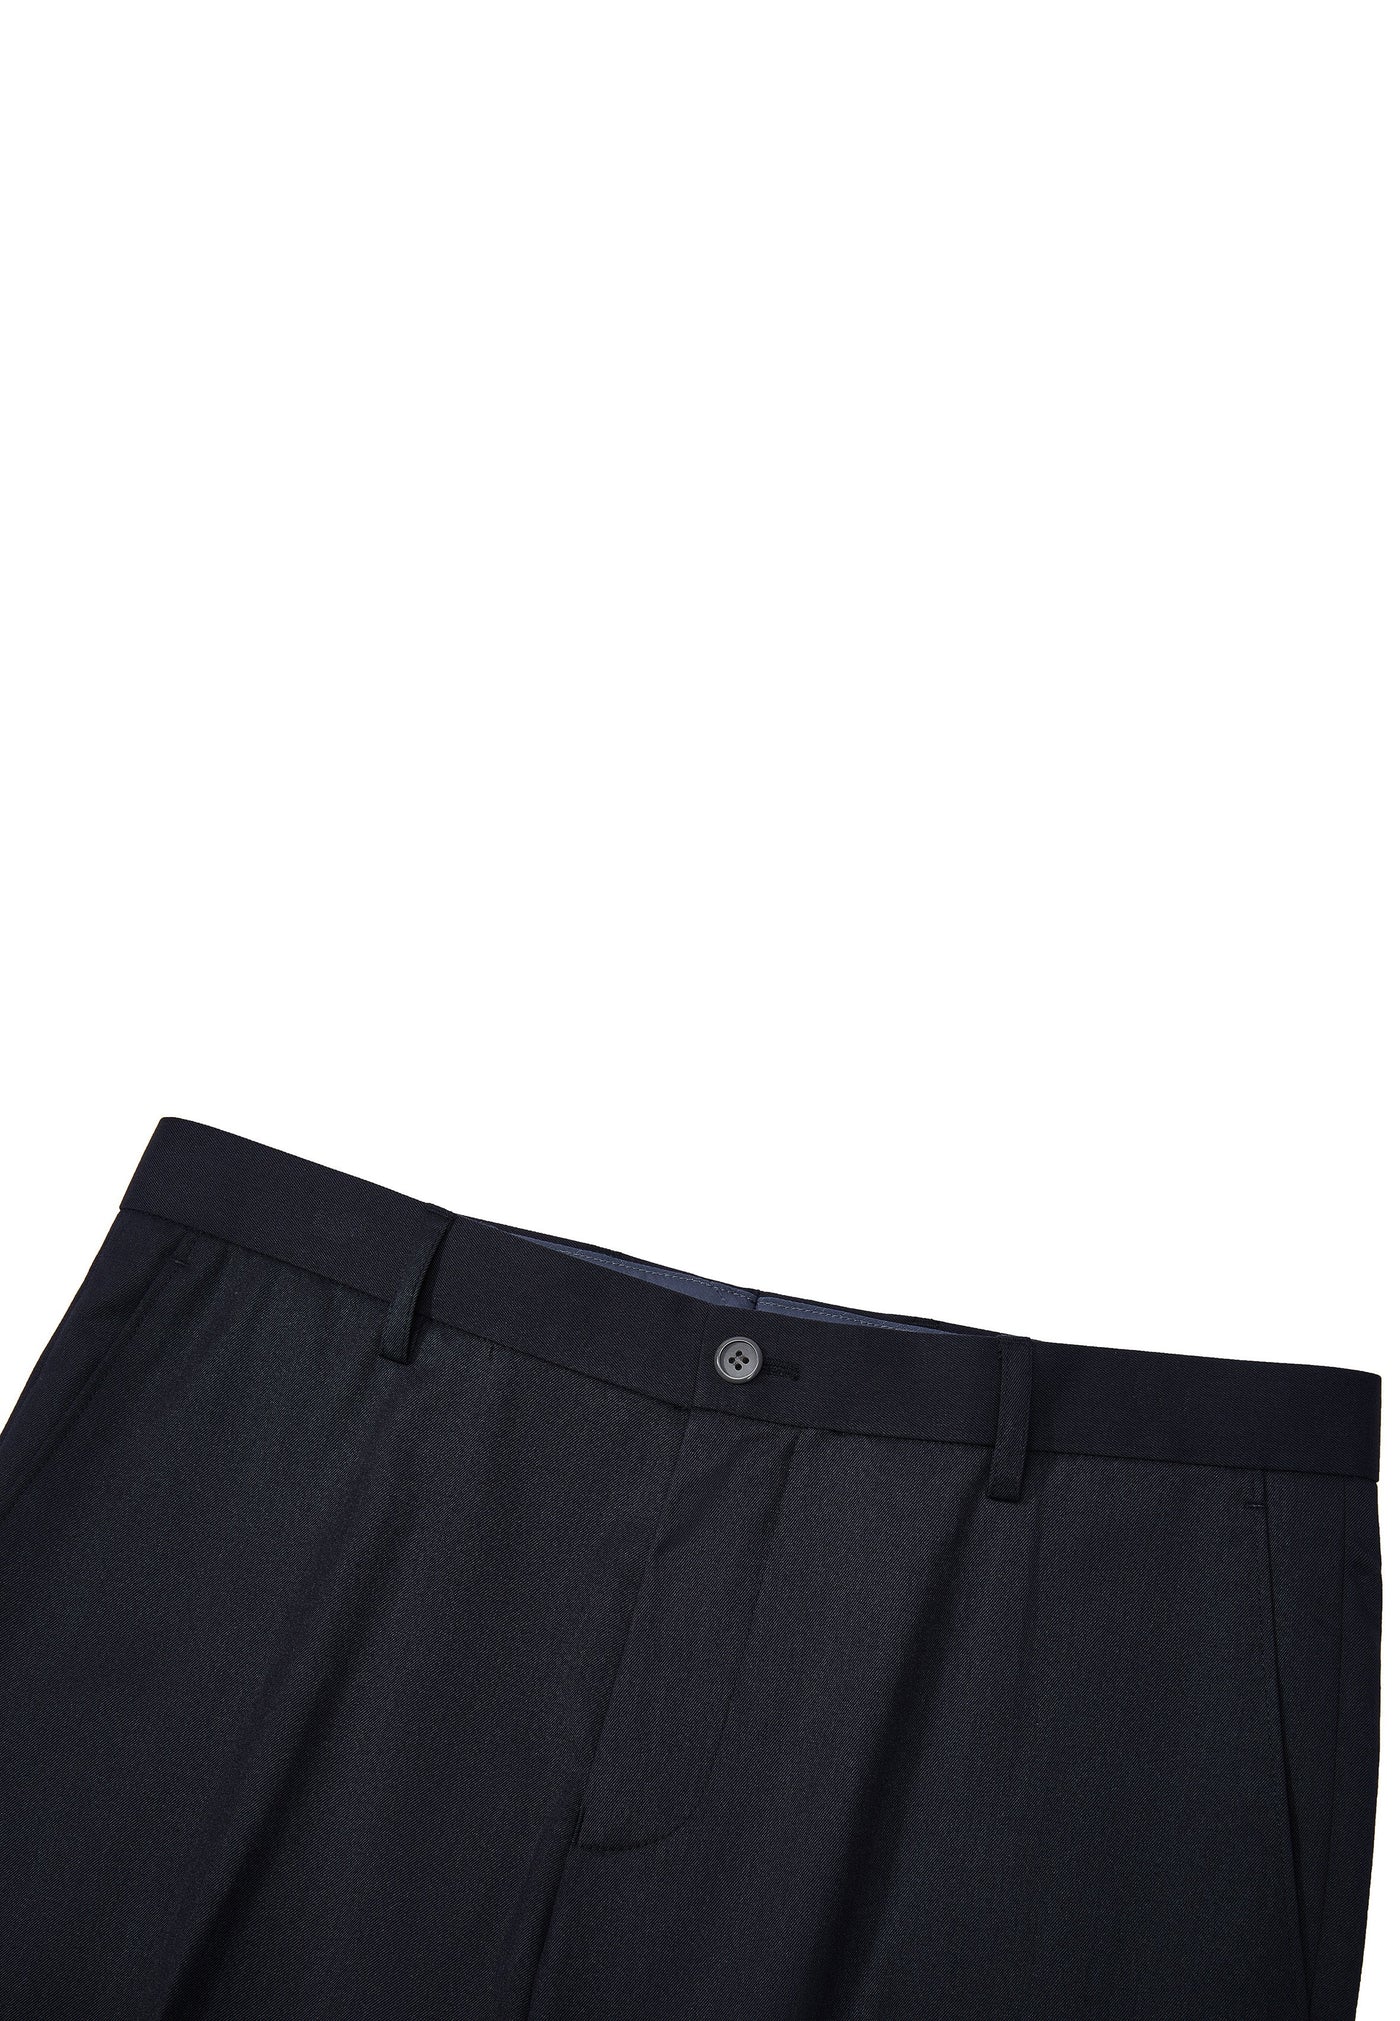 Men Clothing 3M Multi-Way Stretch Formal Pants Slim Fit